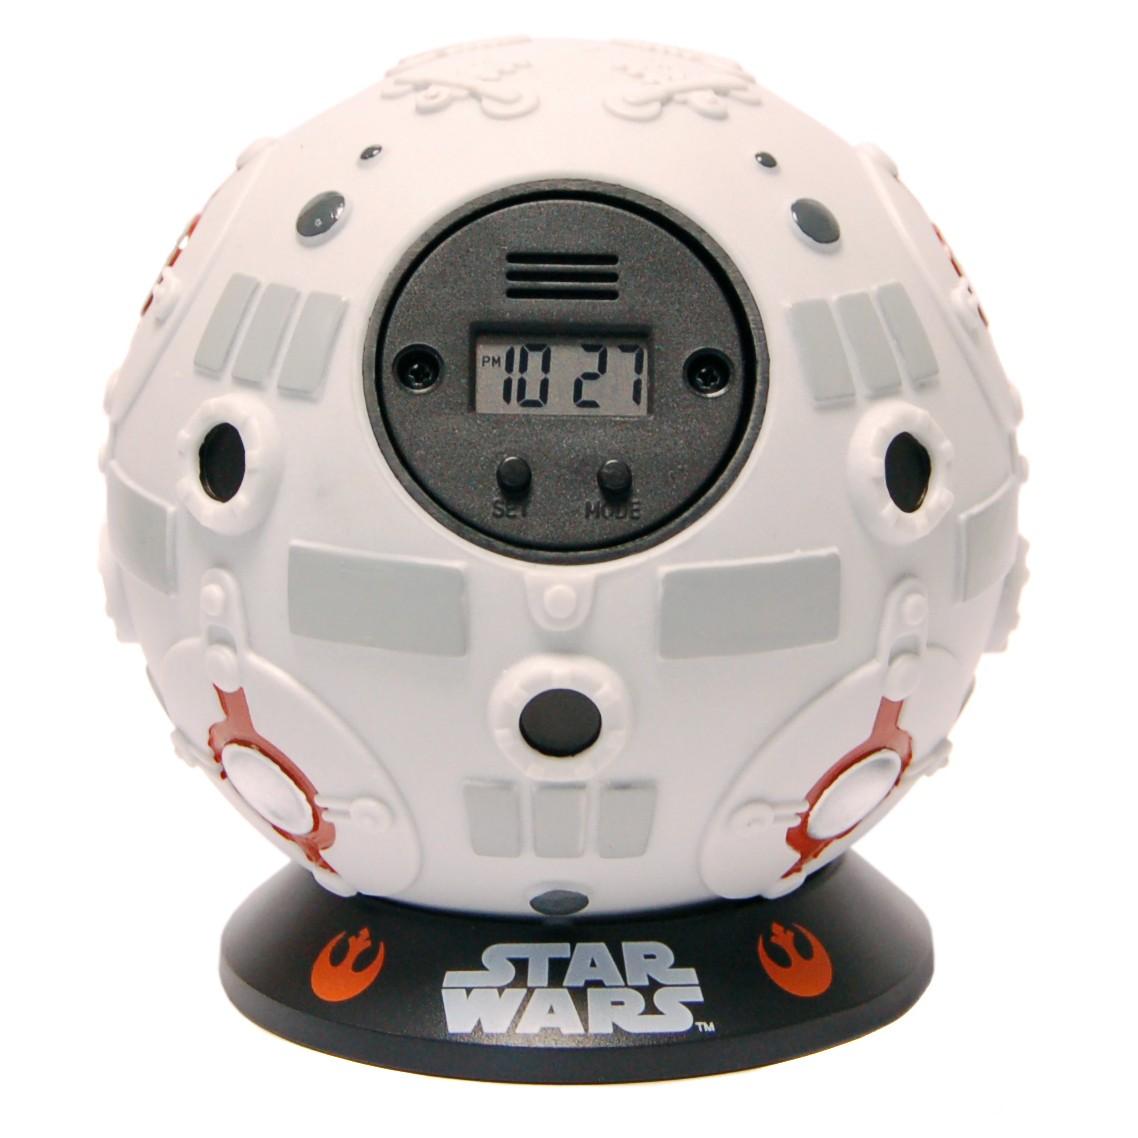 Jedi Training Remote Alarm clock